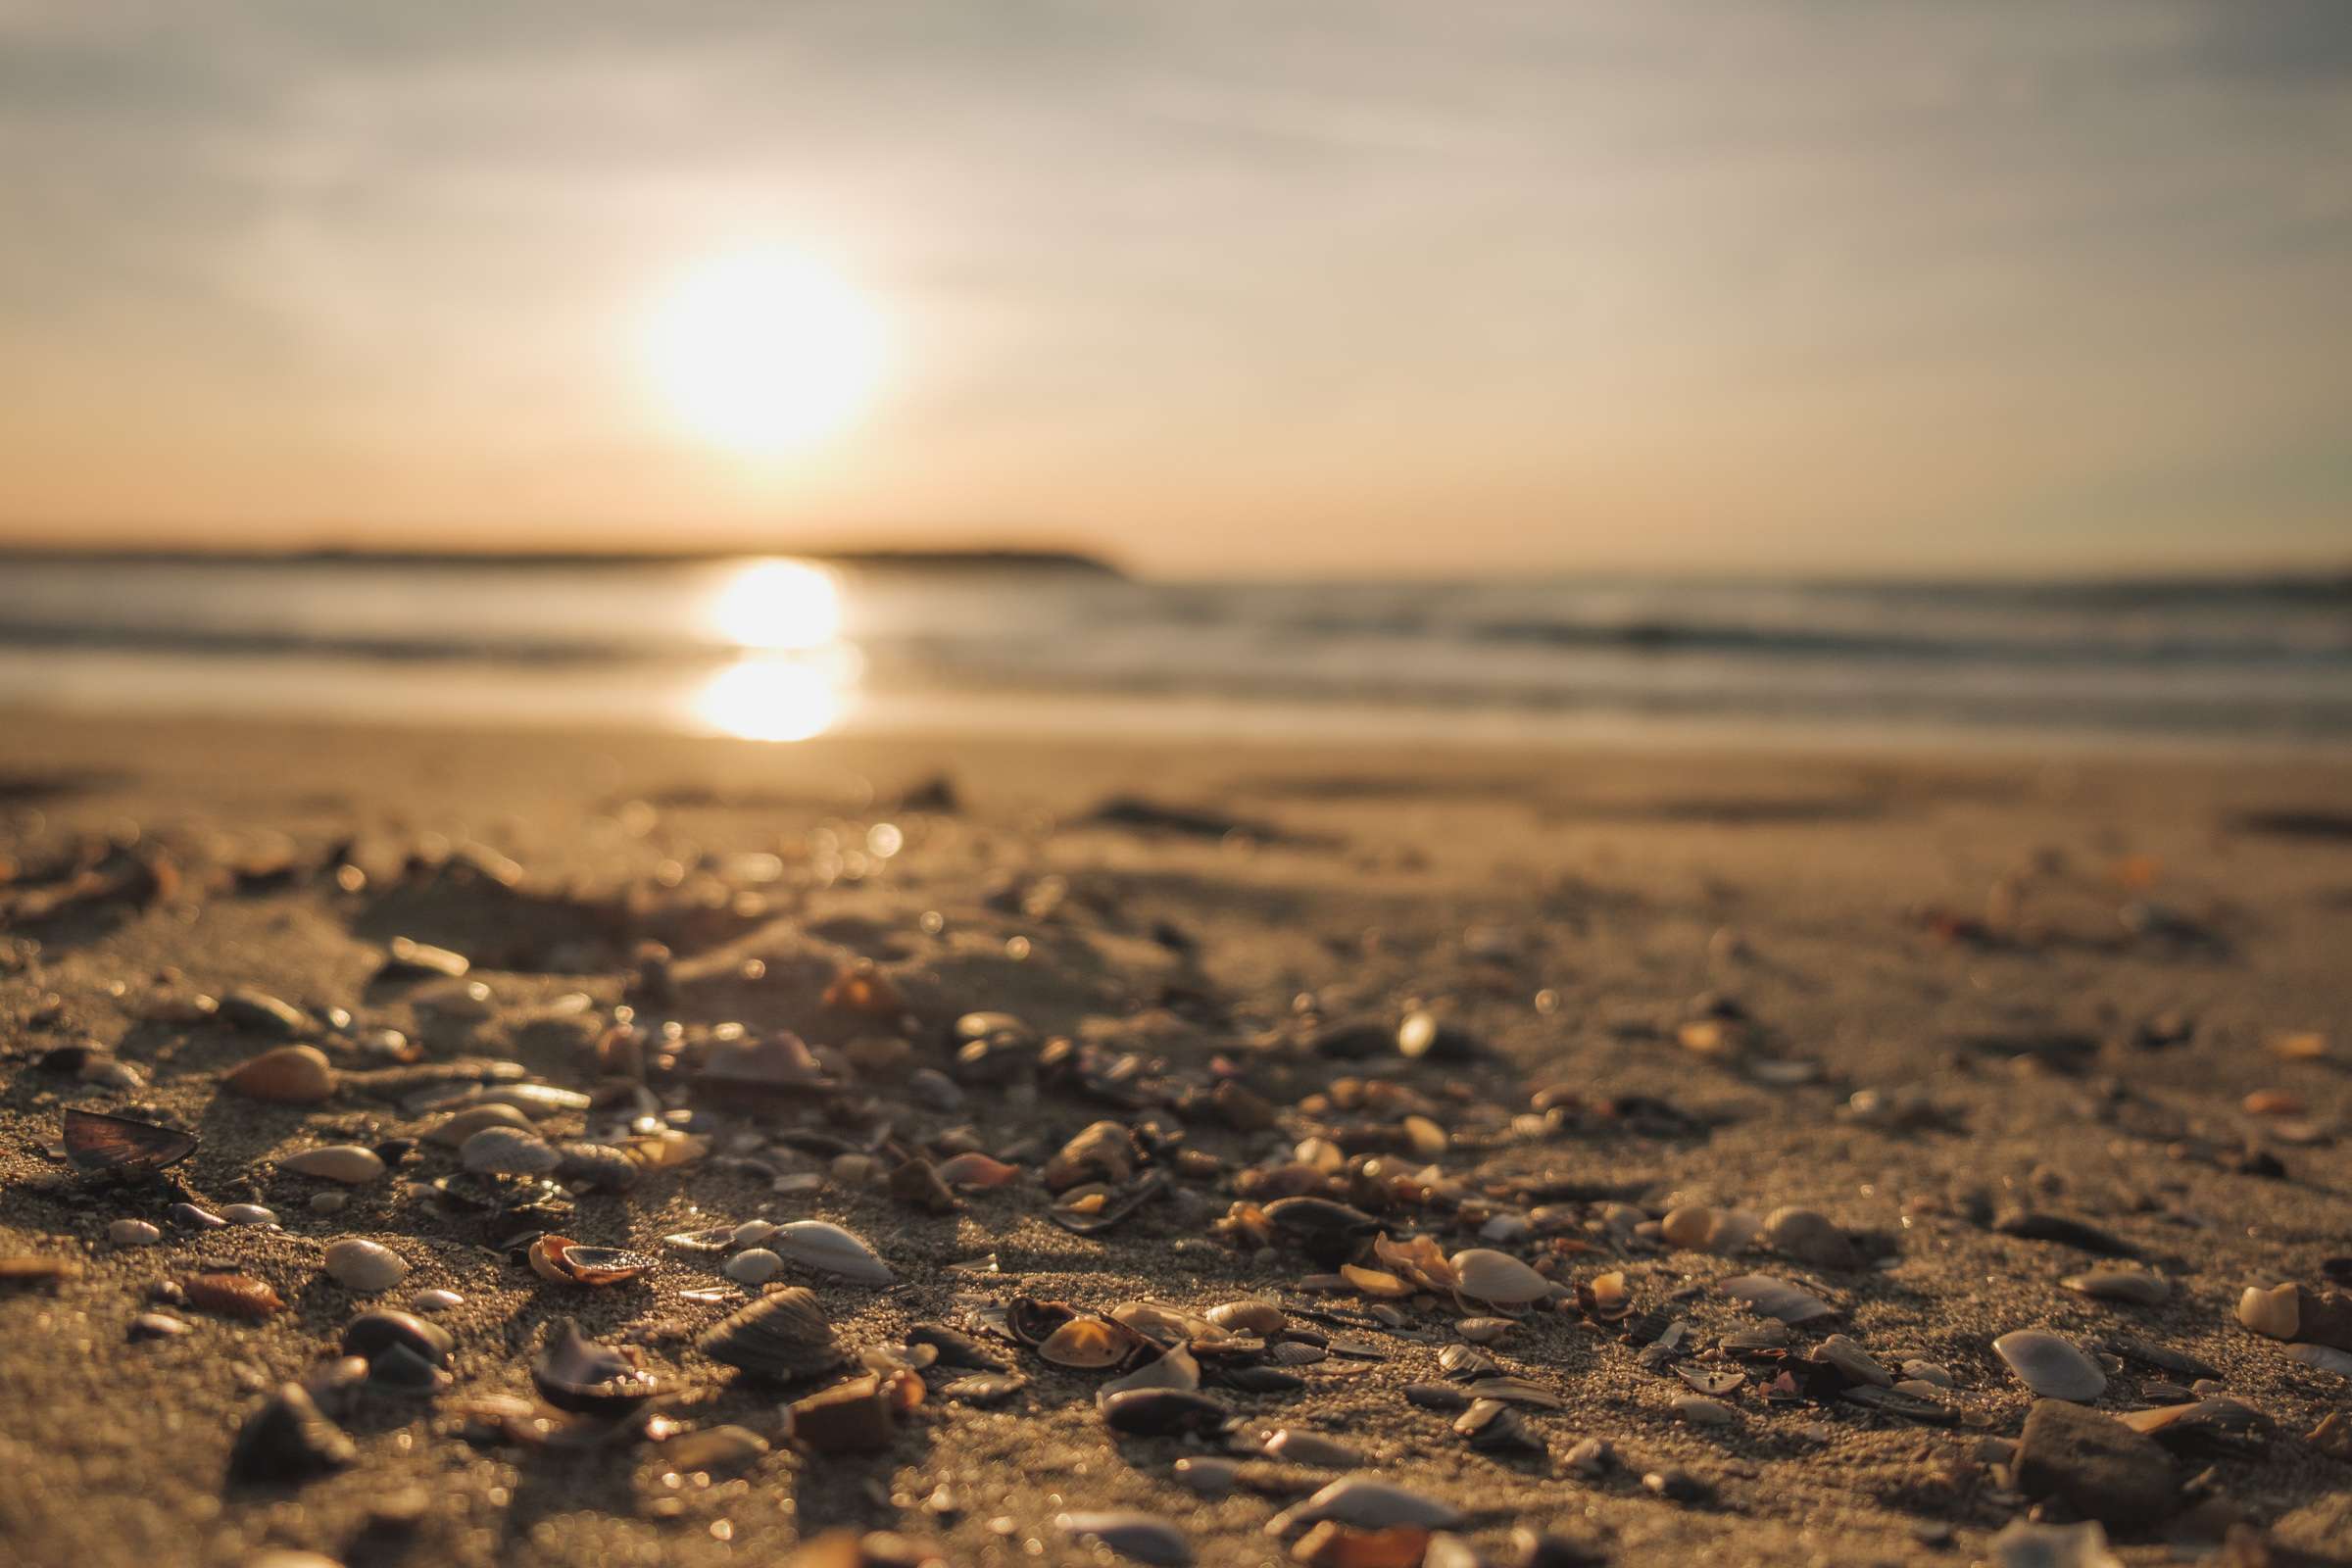 Shells on the Camargue beach during sunrise